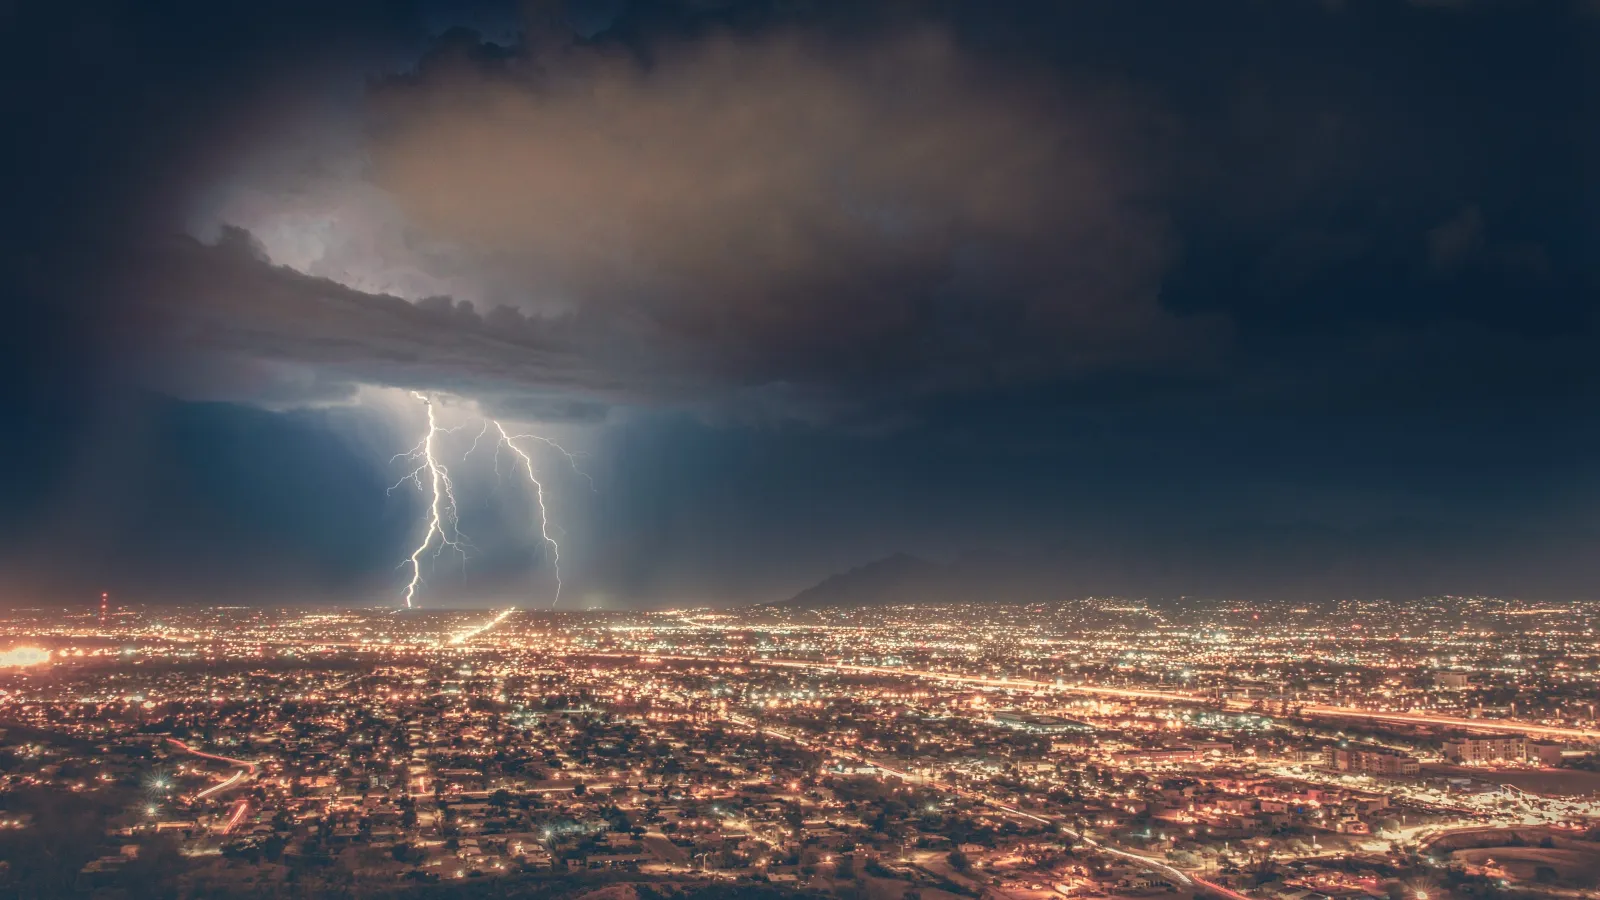 a storm over a city